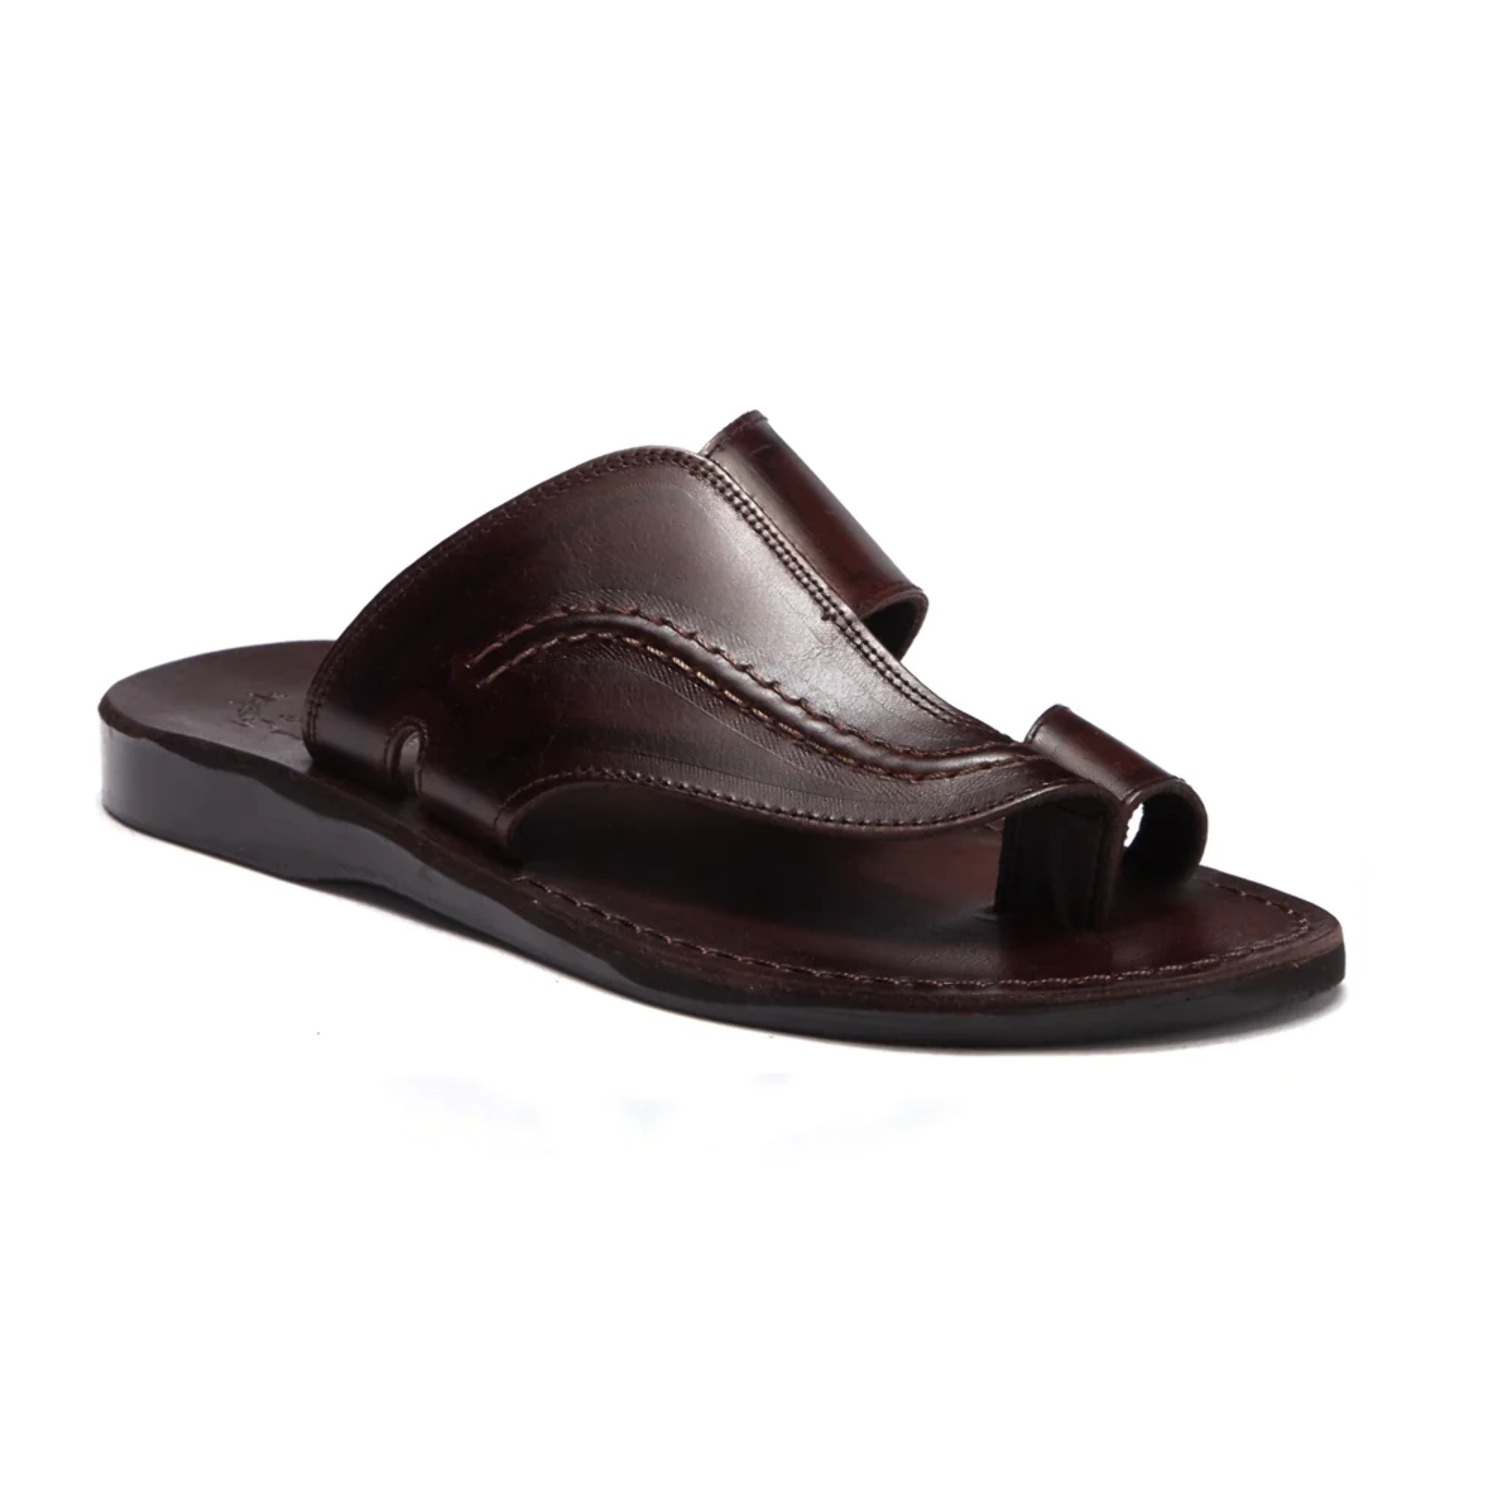 Peter - Leather Toe Strap Sandal - Mens Sandals - image 1 of 8